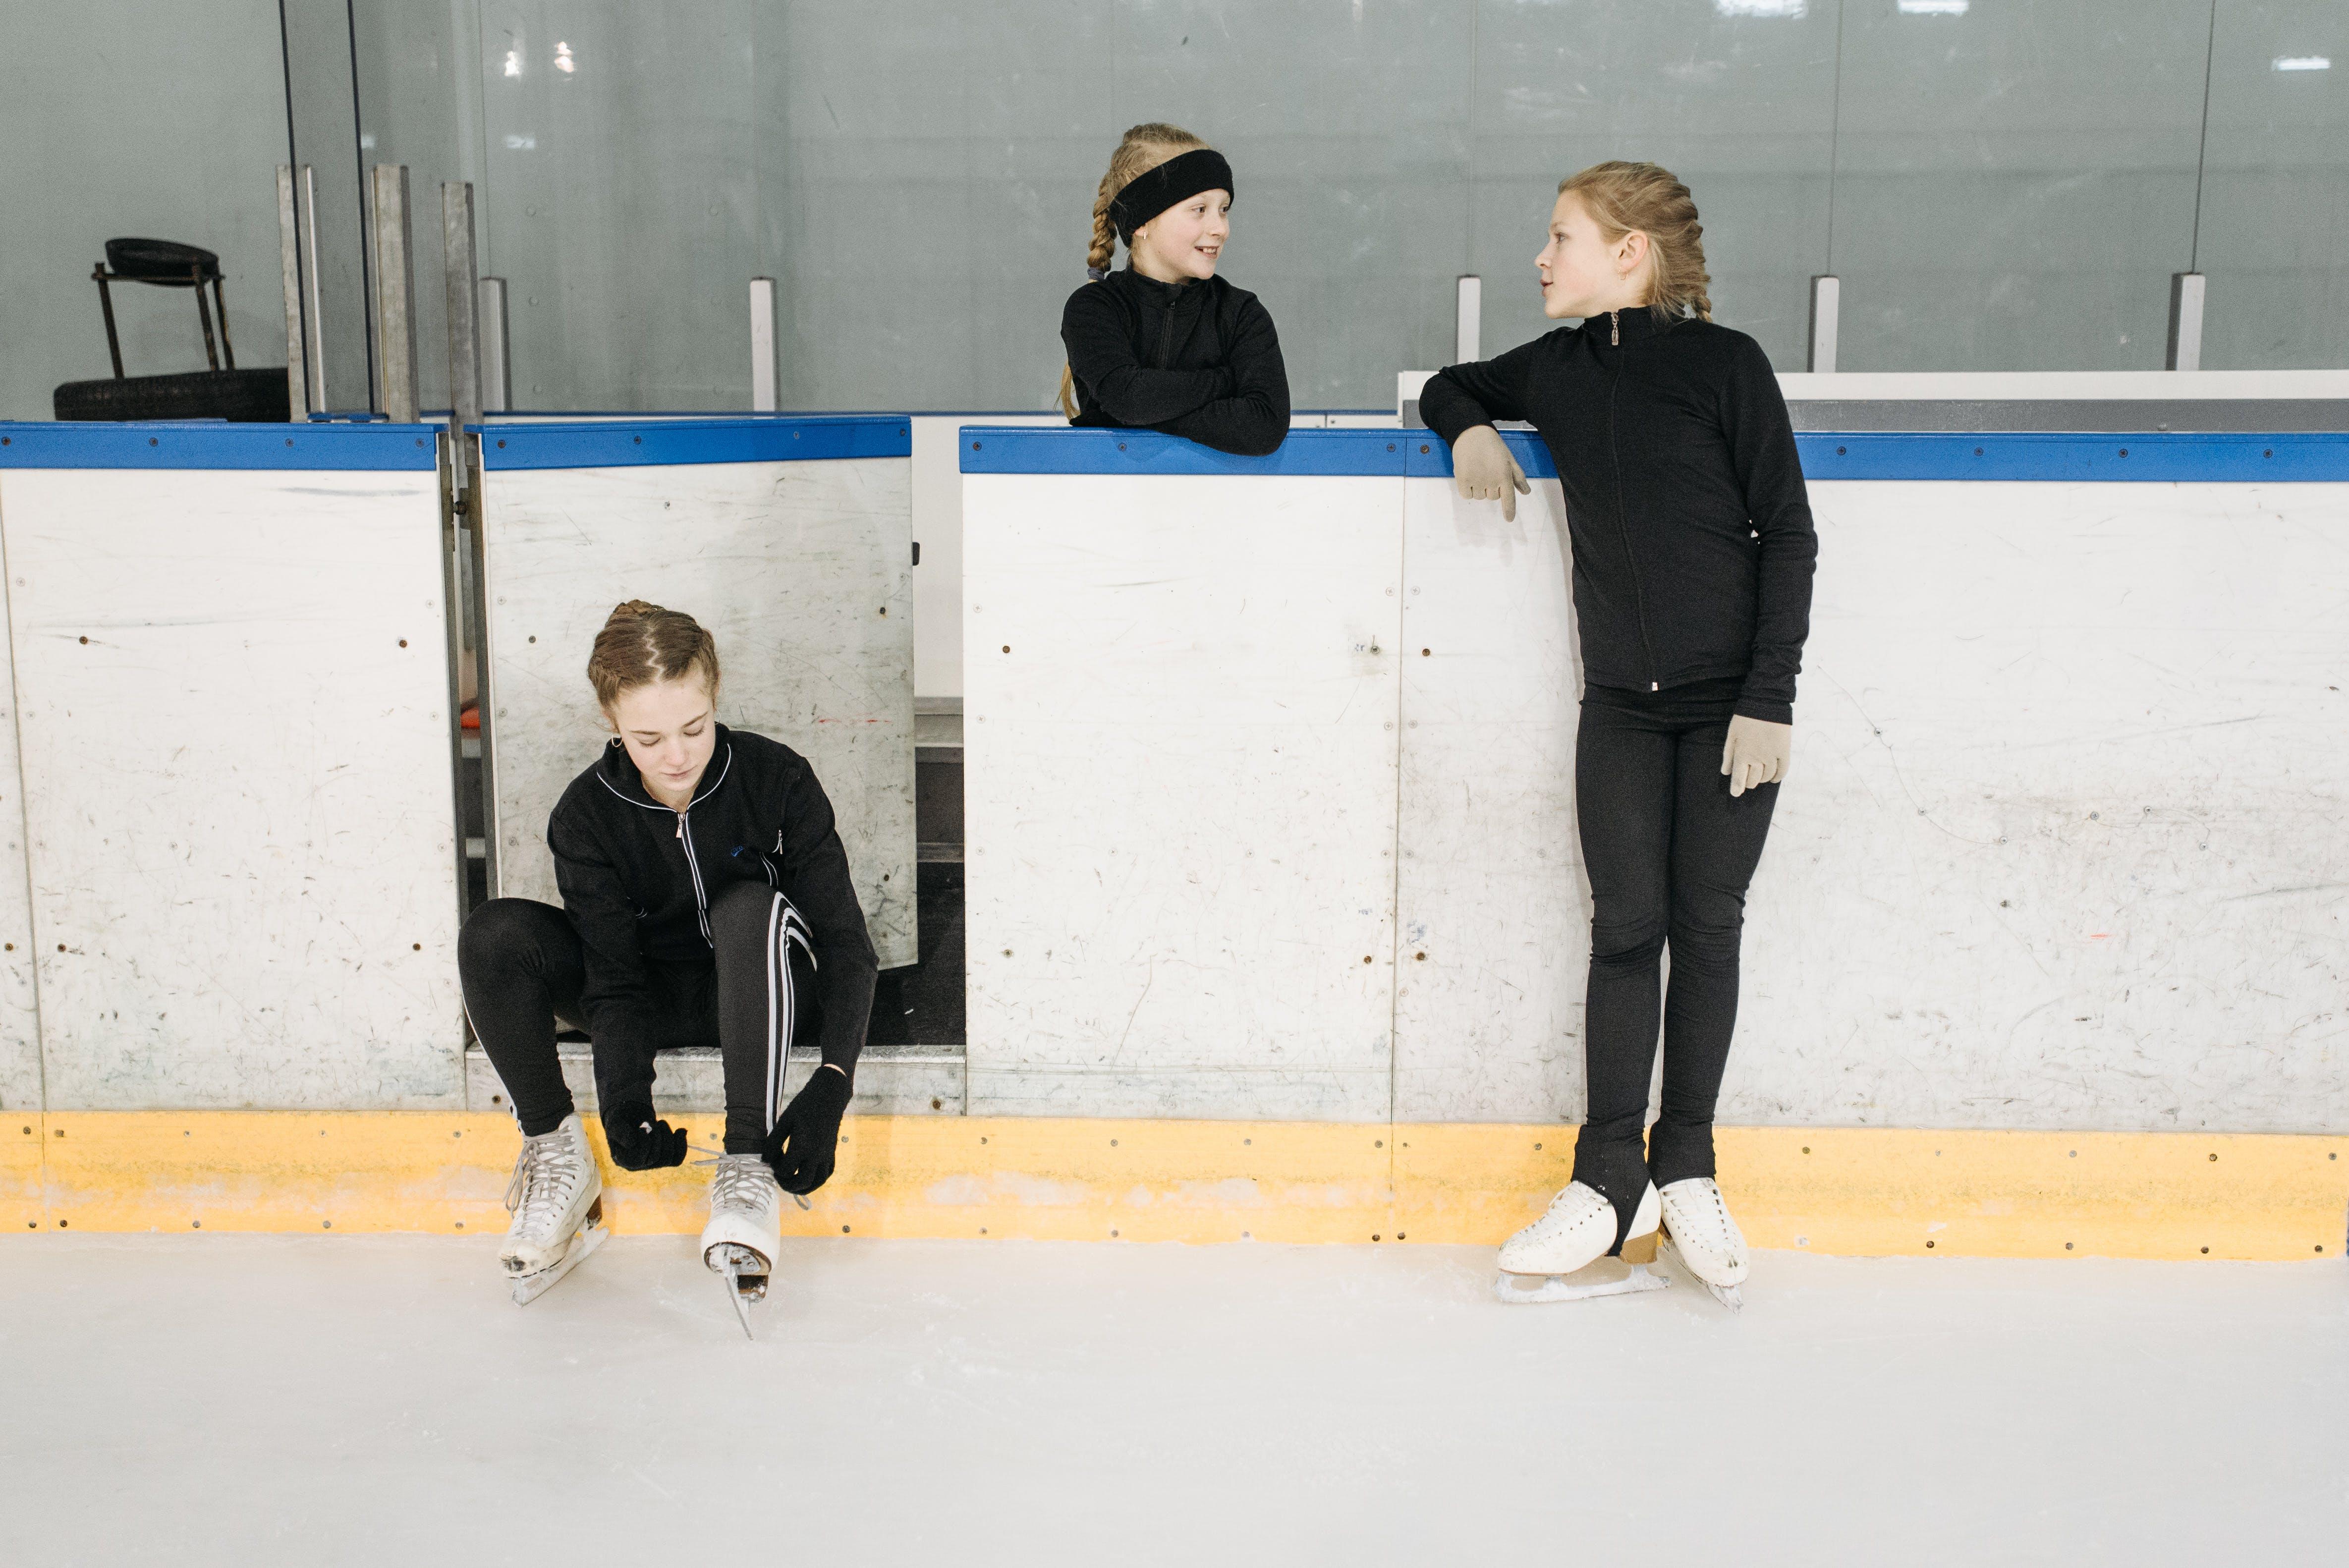 Children ice skating